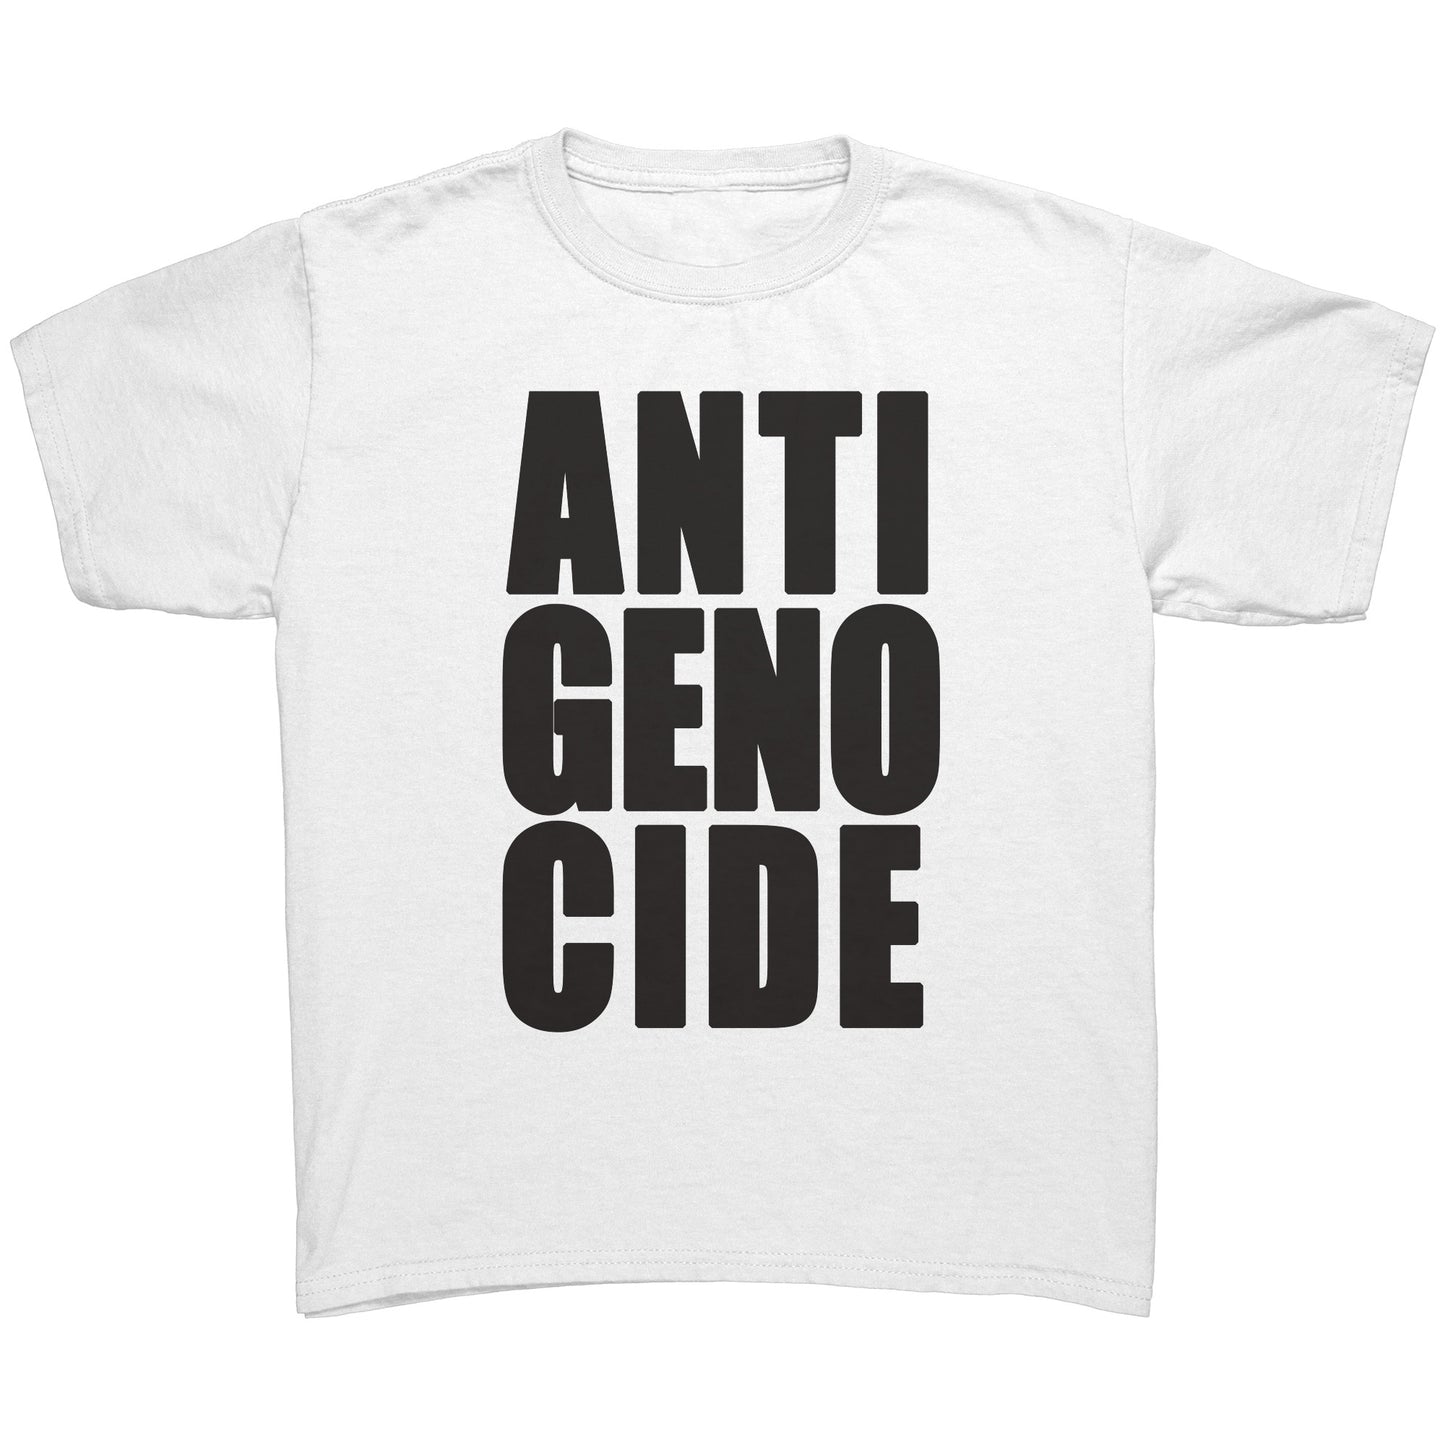 Youth Tee "Anti Genocide" (black print)